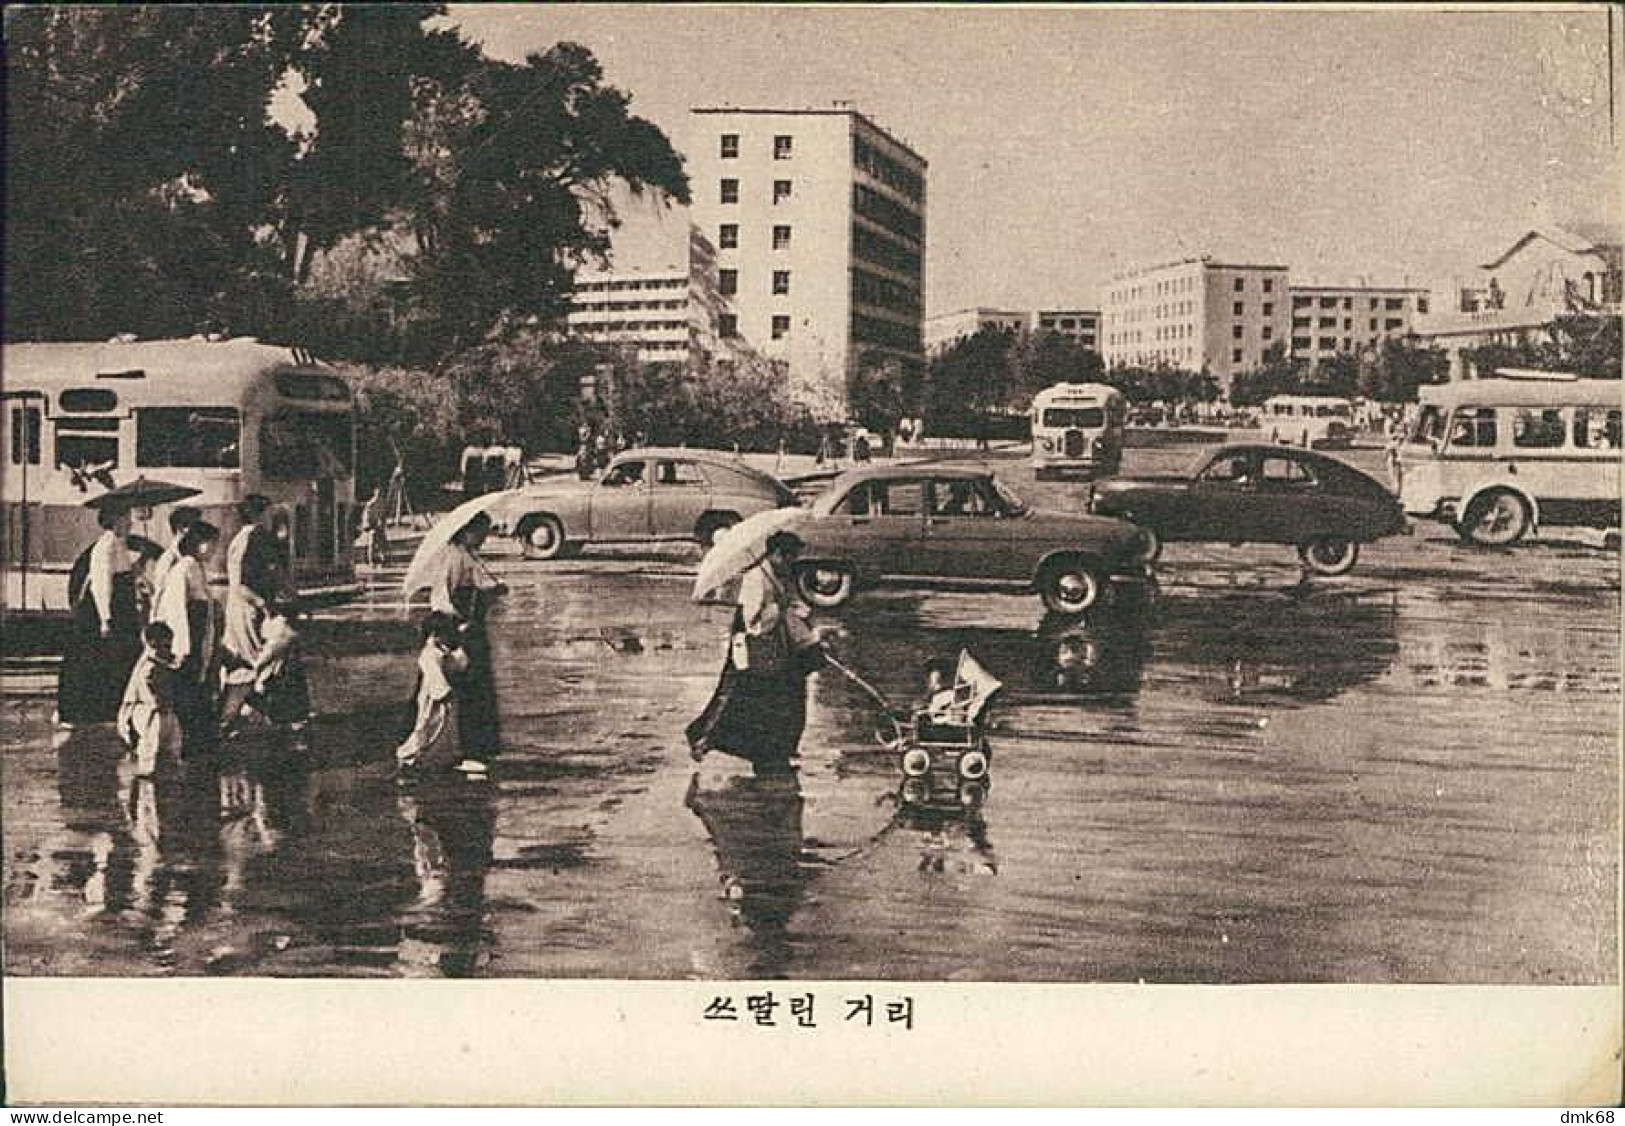 NORTH KOREA - PYONGYANG - THE STALIN STREET - 1960s (18369) - Corée Du Nord